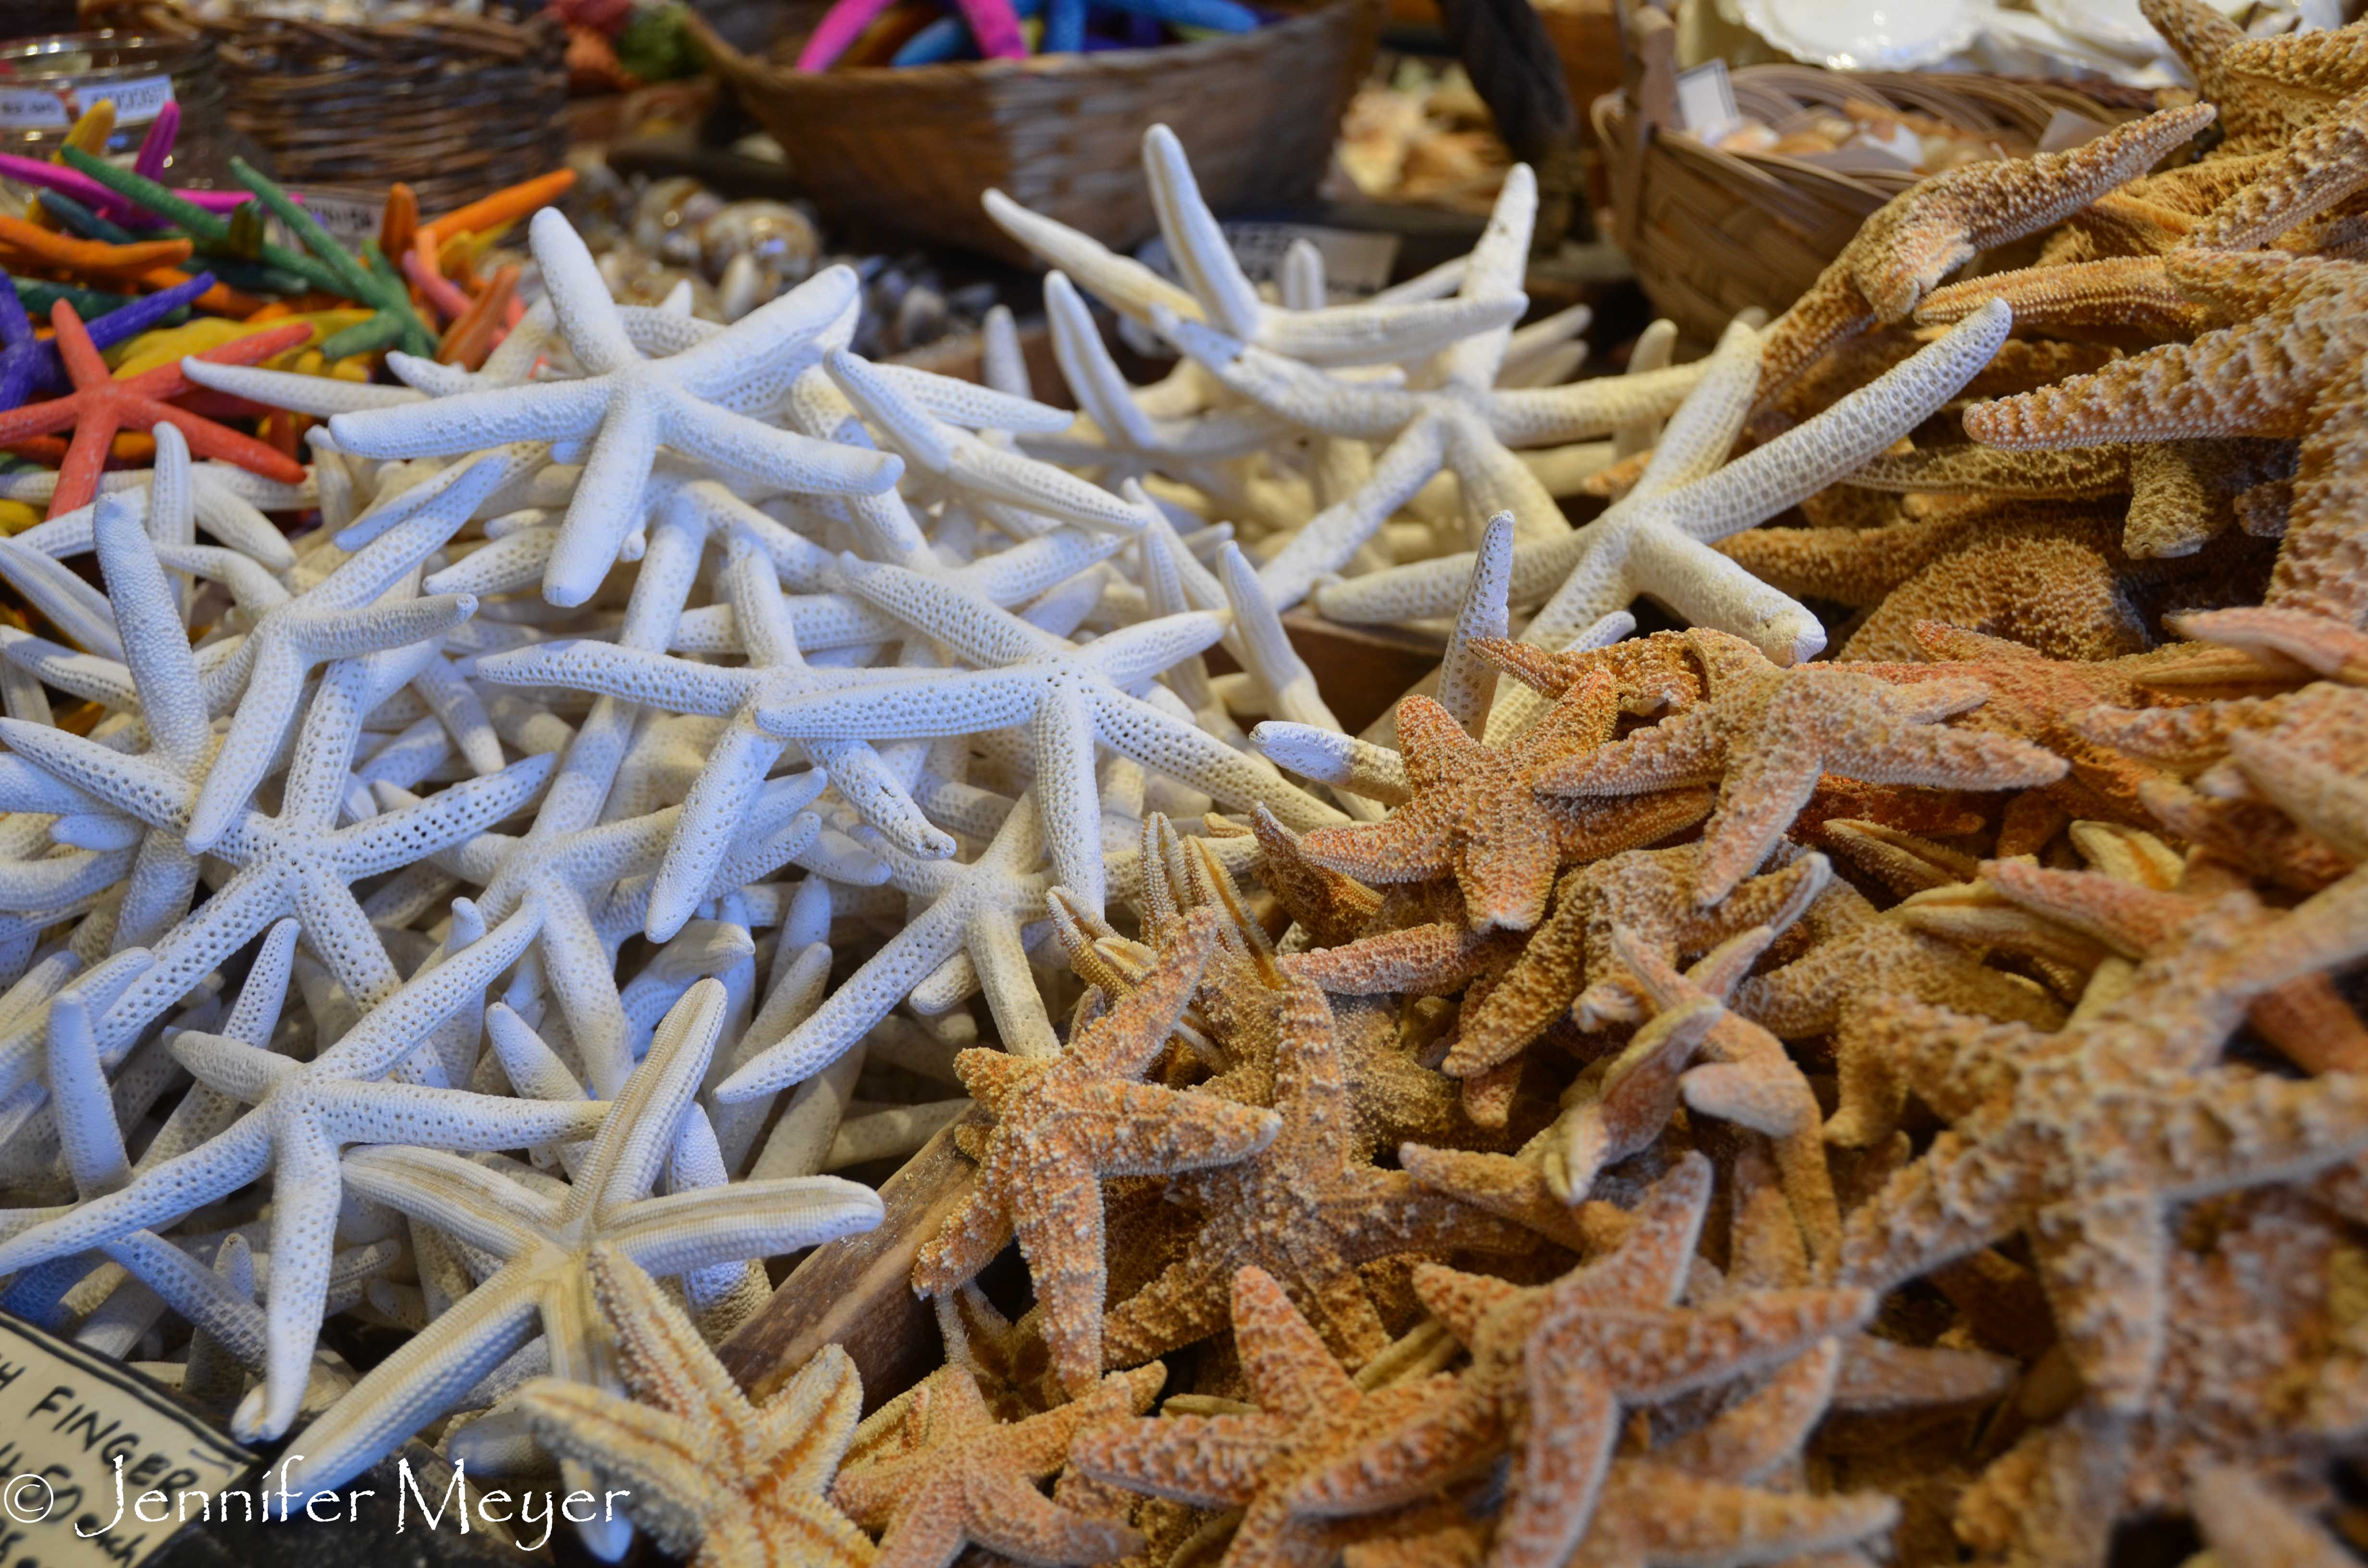 Lots of starfish.